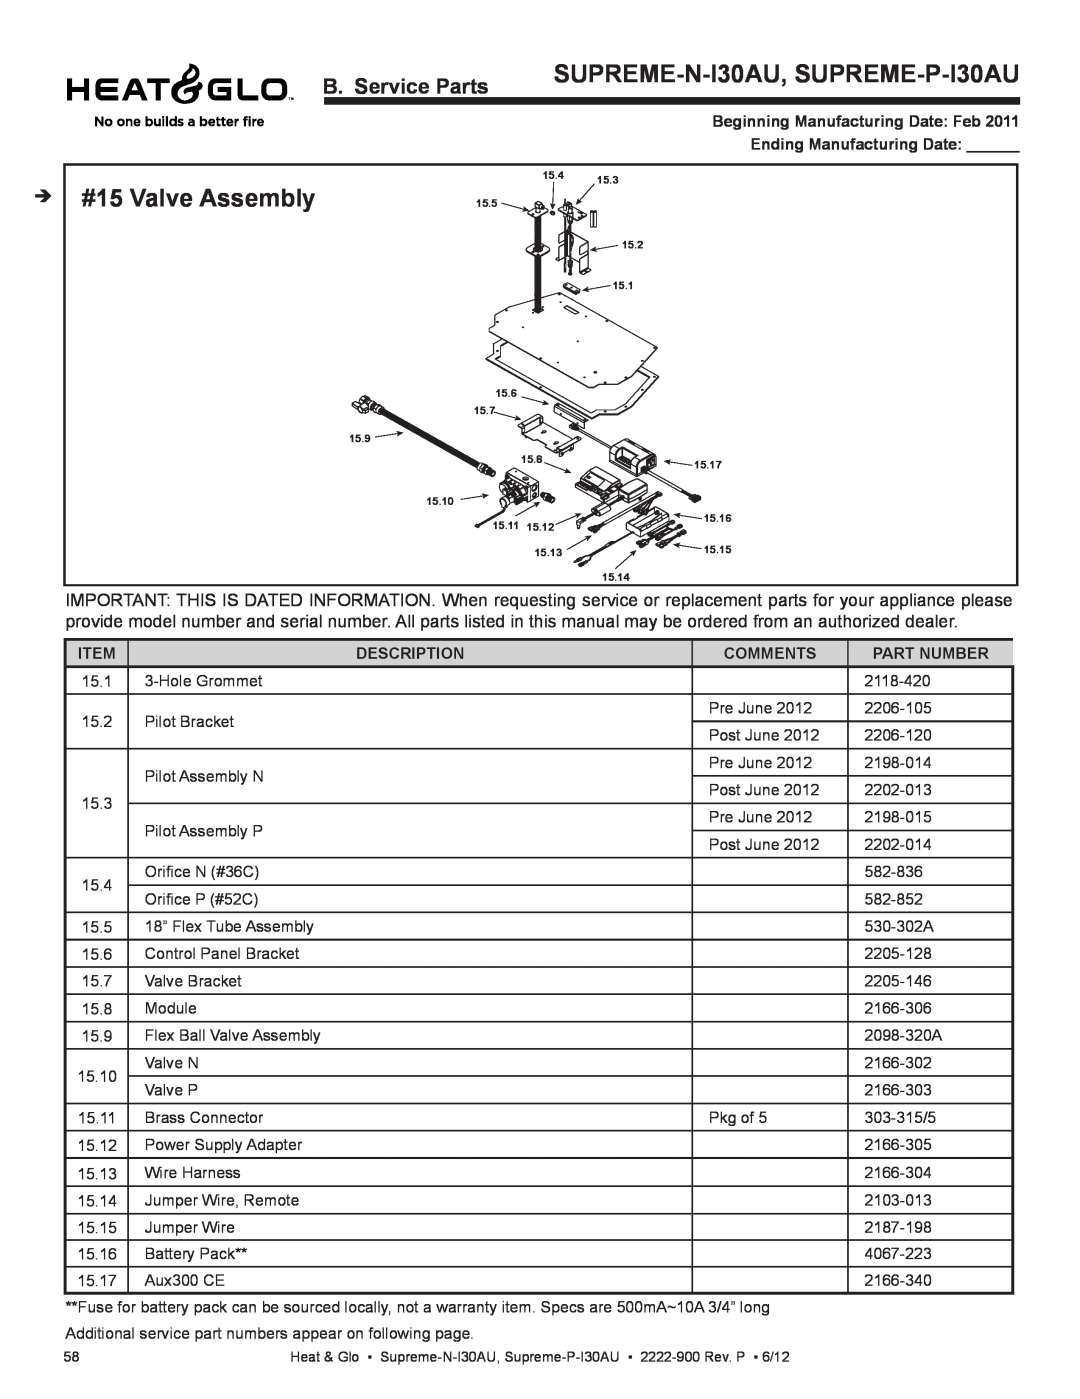 Heat & Glo LifeStyle owner manual #15 Valve Assembly, SUPREME-N-I30AU, SUPREME-P-I30AU, B. Service Parts 